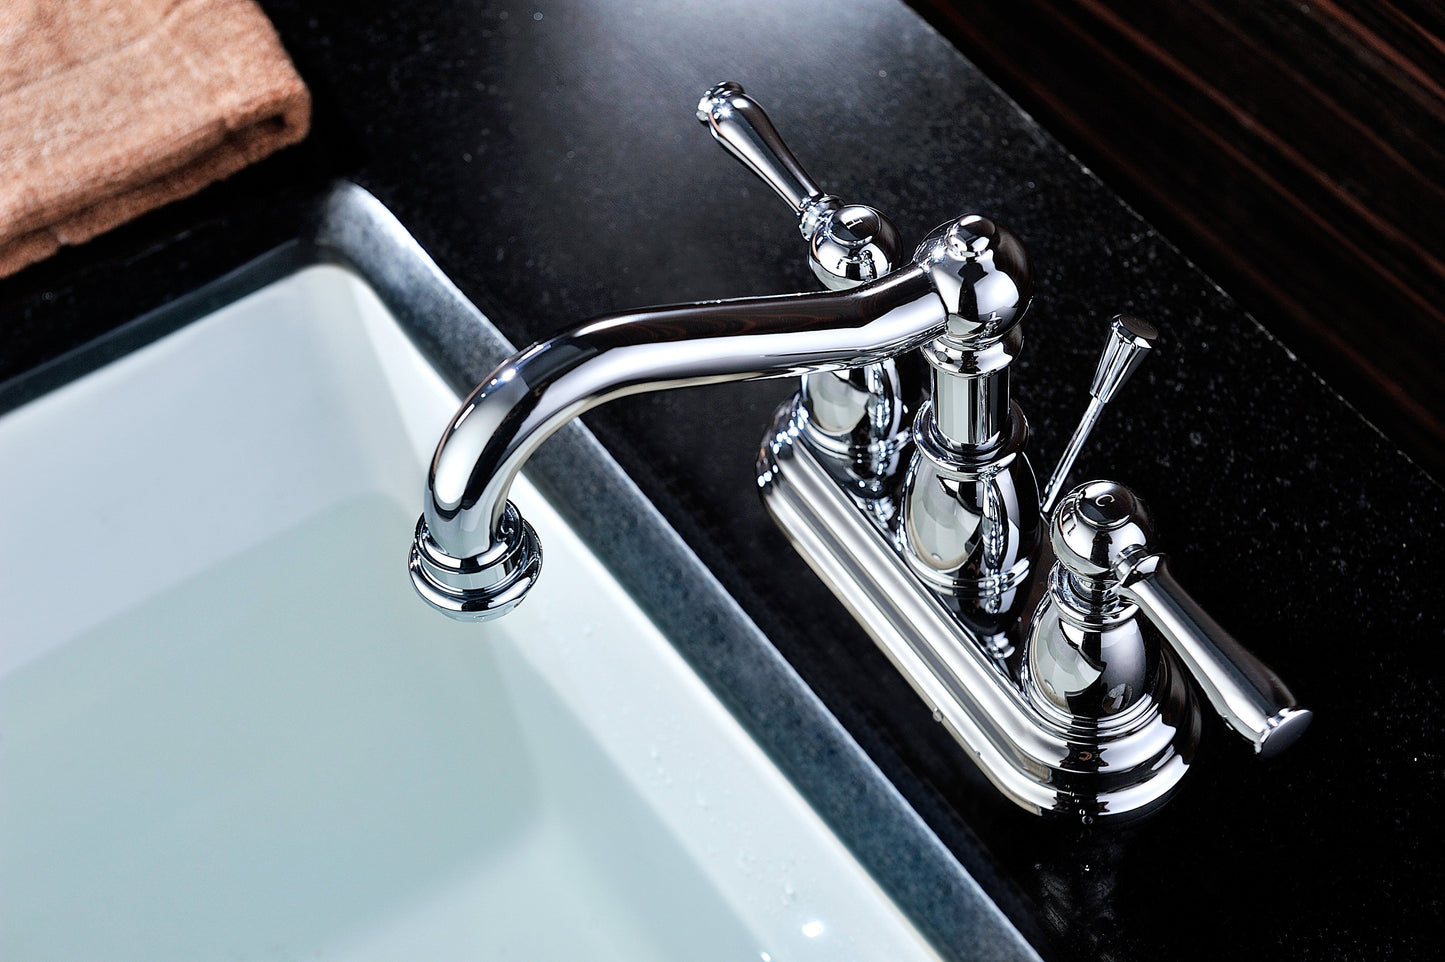 Edge Series 4 in. Centerset 2-Handle Mid-Arc Bathroom Faucet in Polished Chrome - Luxe Bathroom Vanities